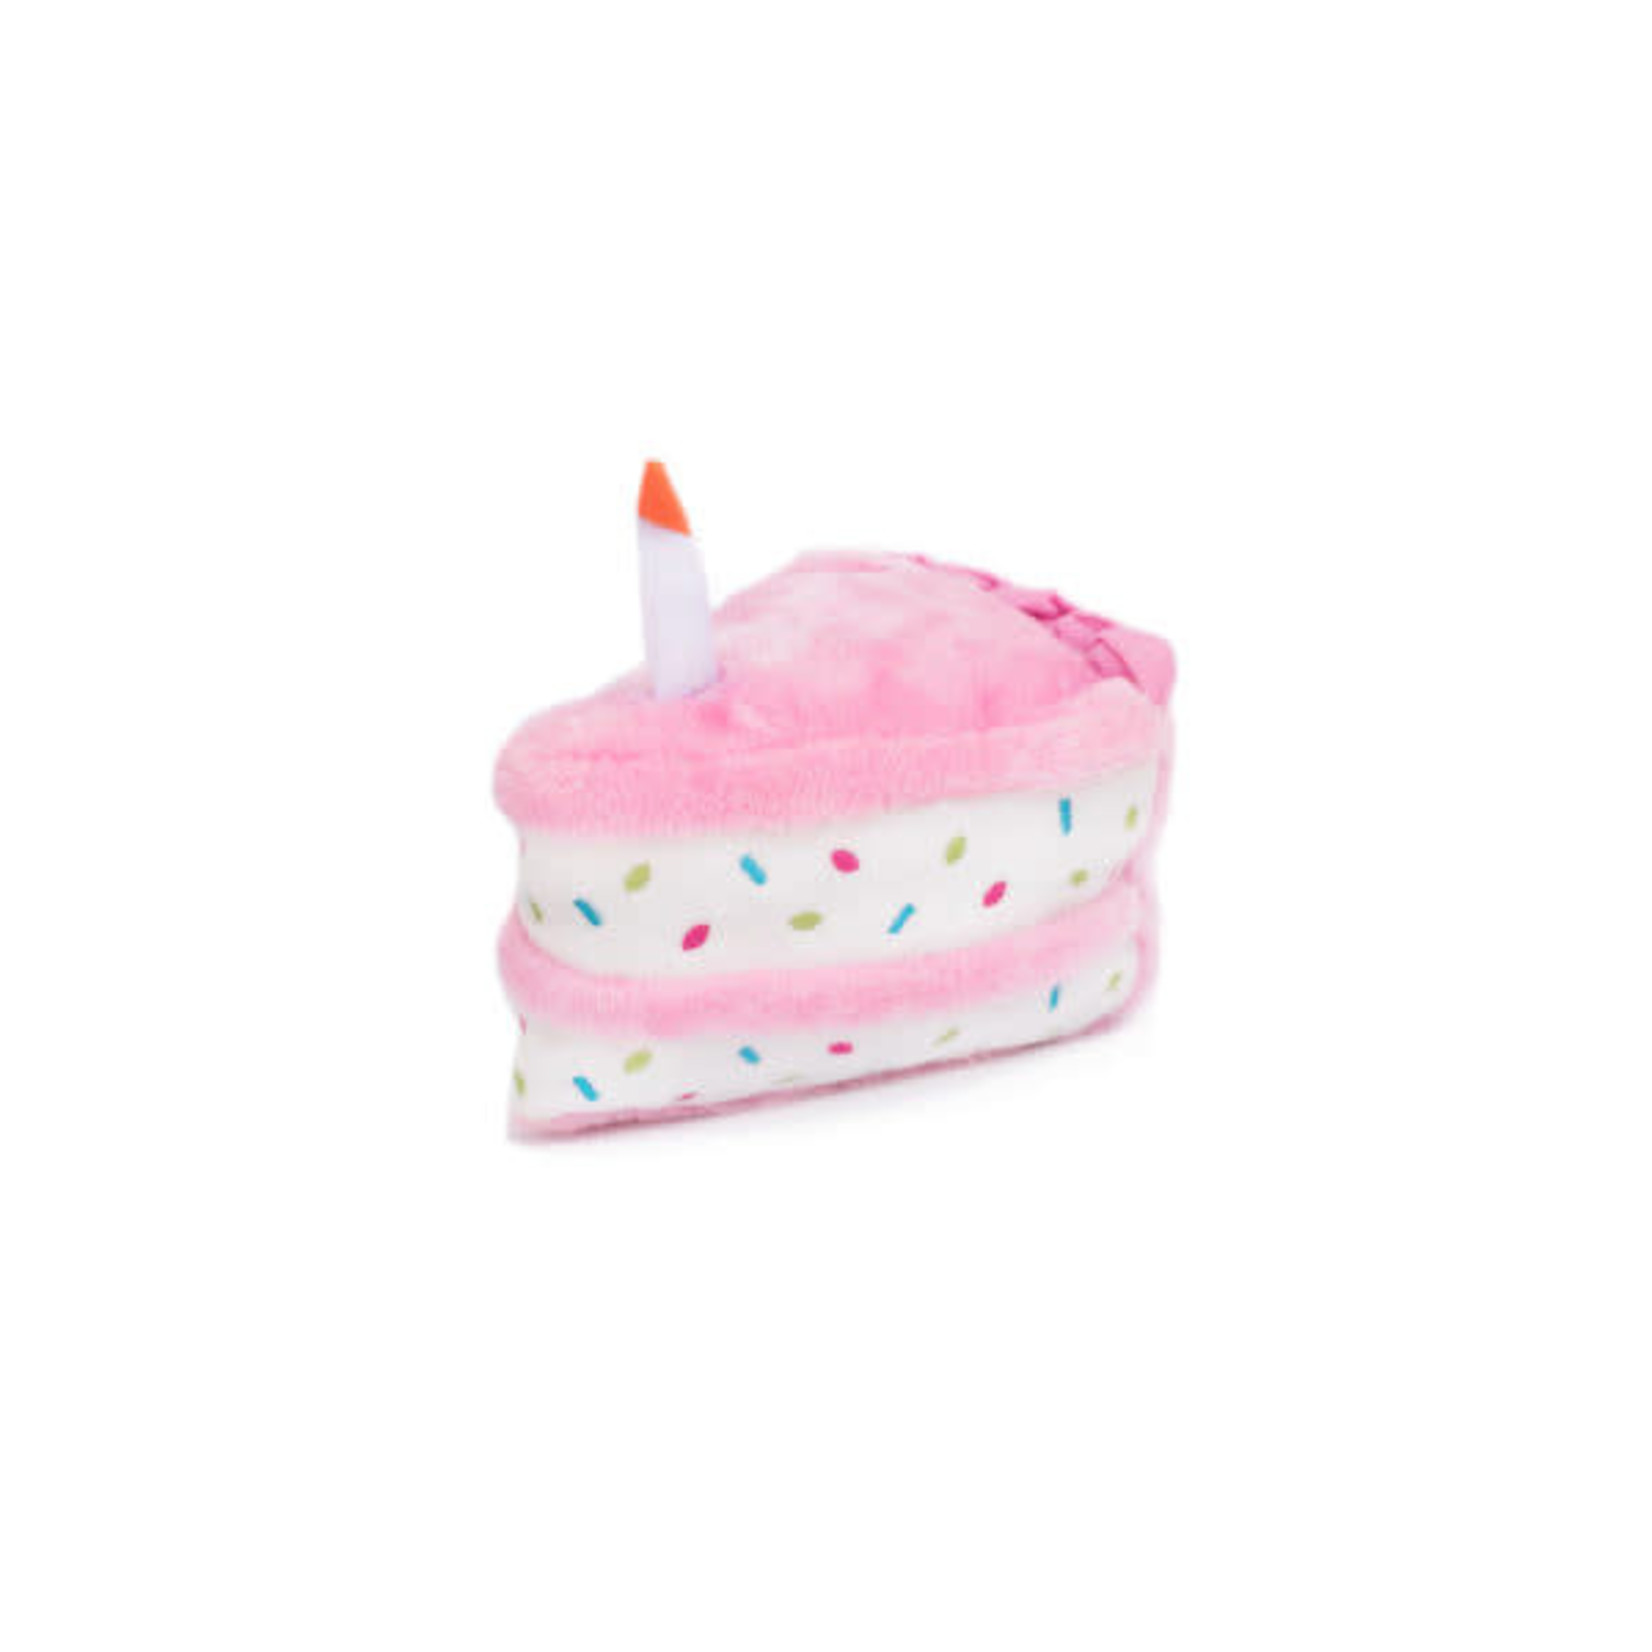 Zippy Paws Zippy Paws Birthday Cake Slice Pink